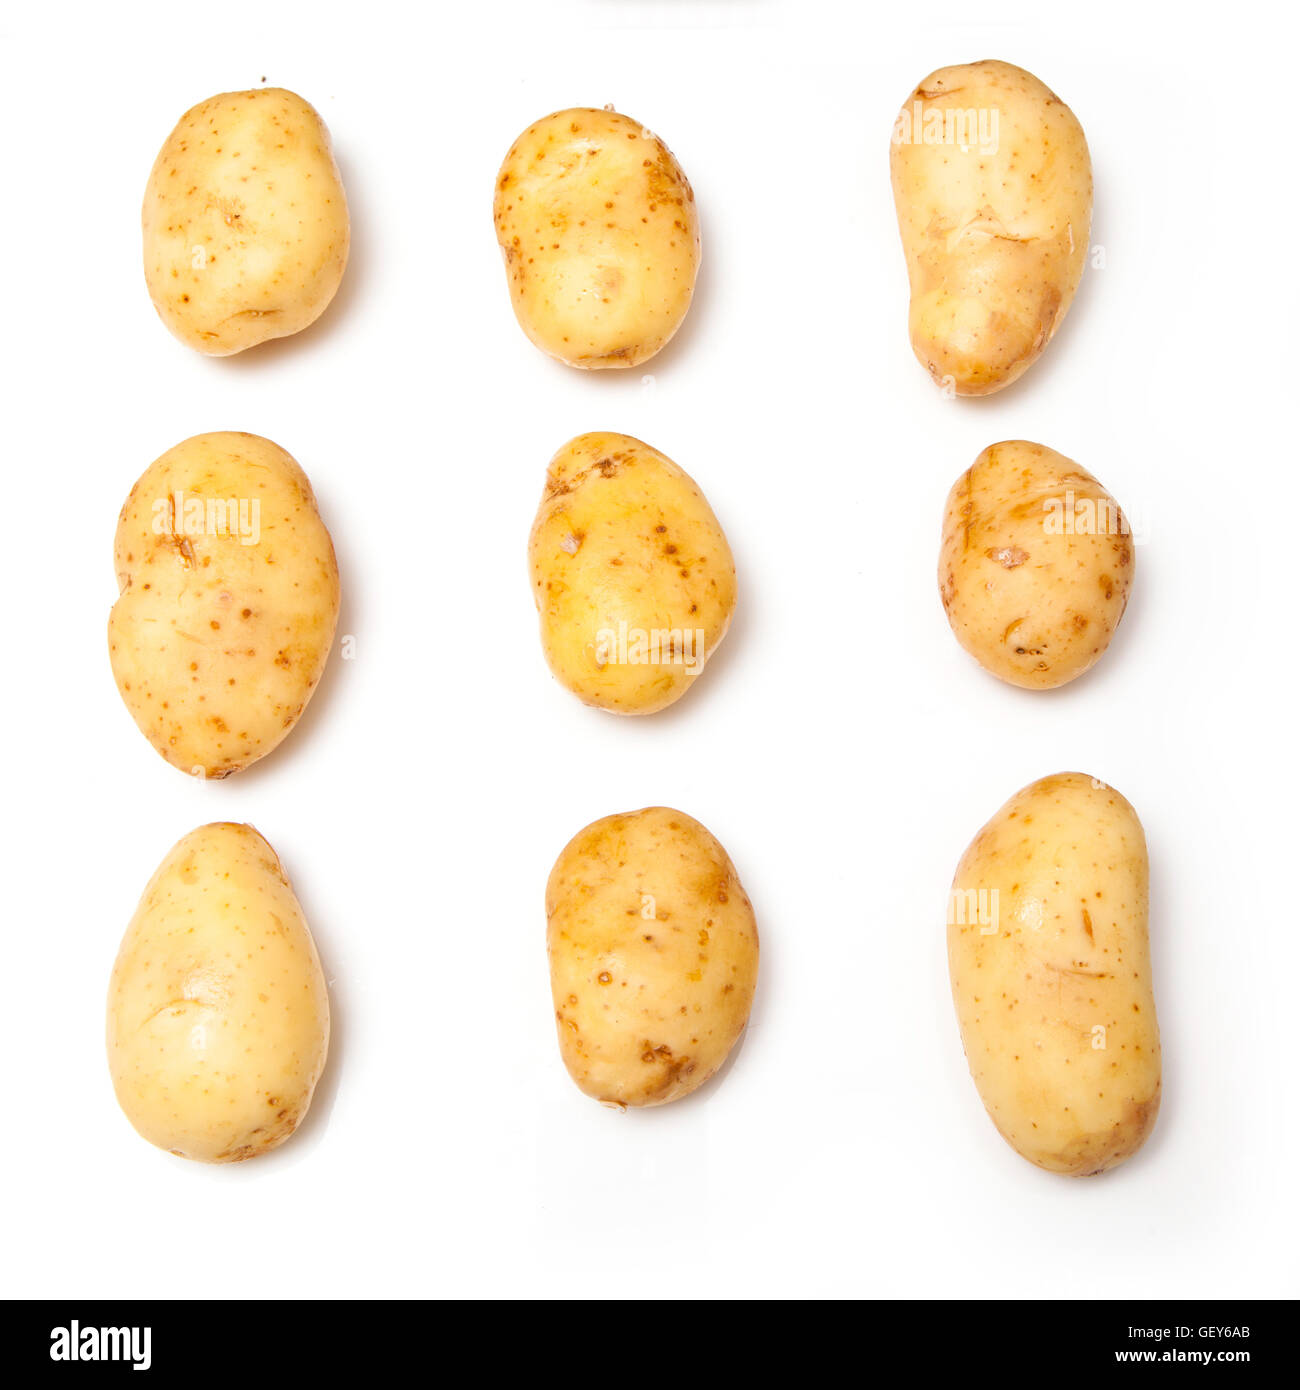 White potatoes isolated on a white studio background. Stock Photo